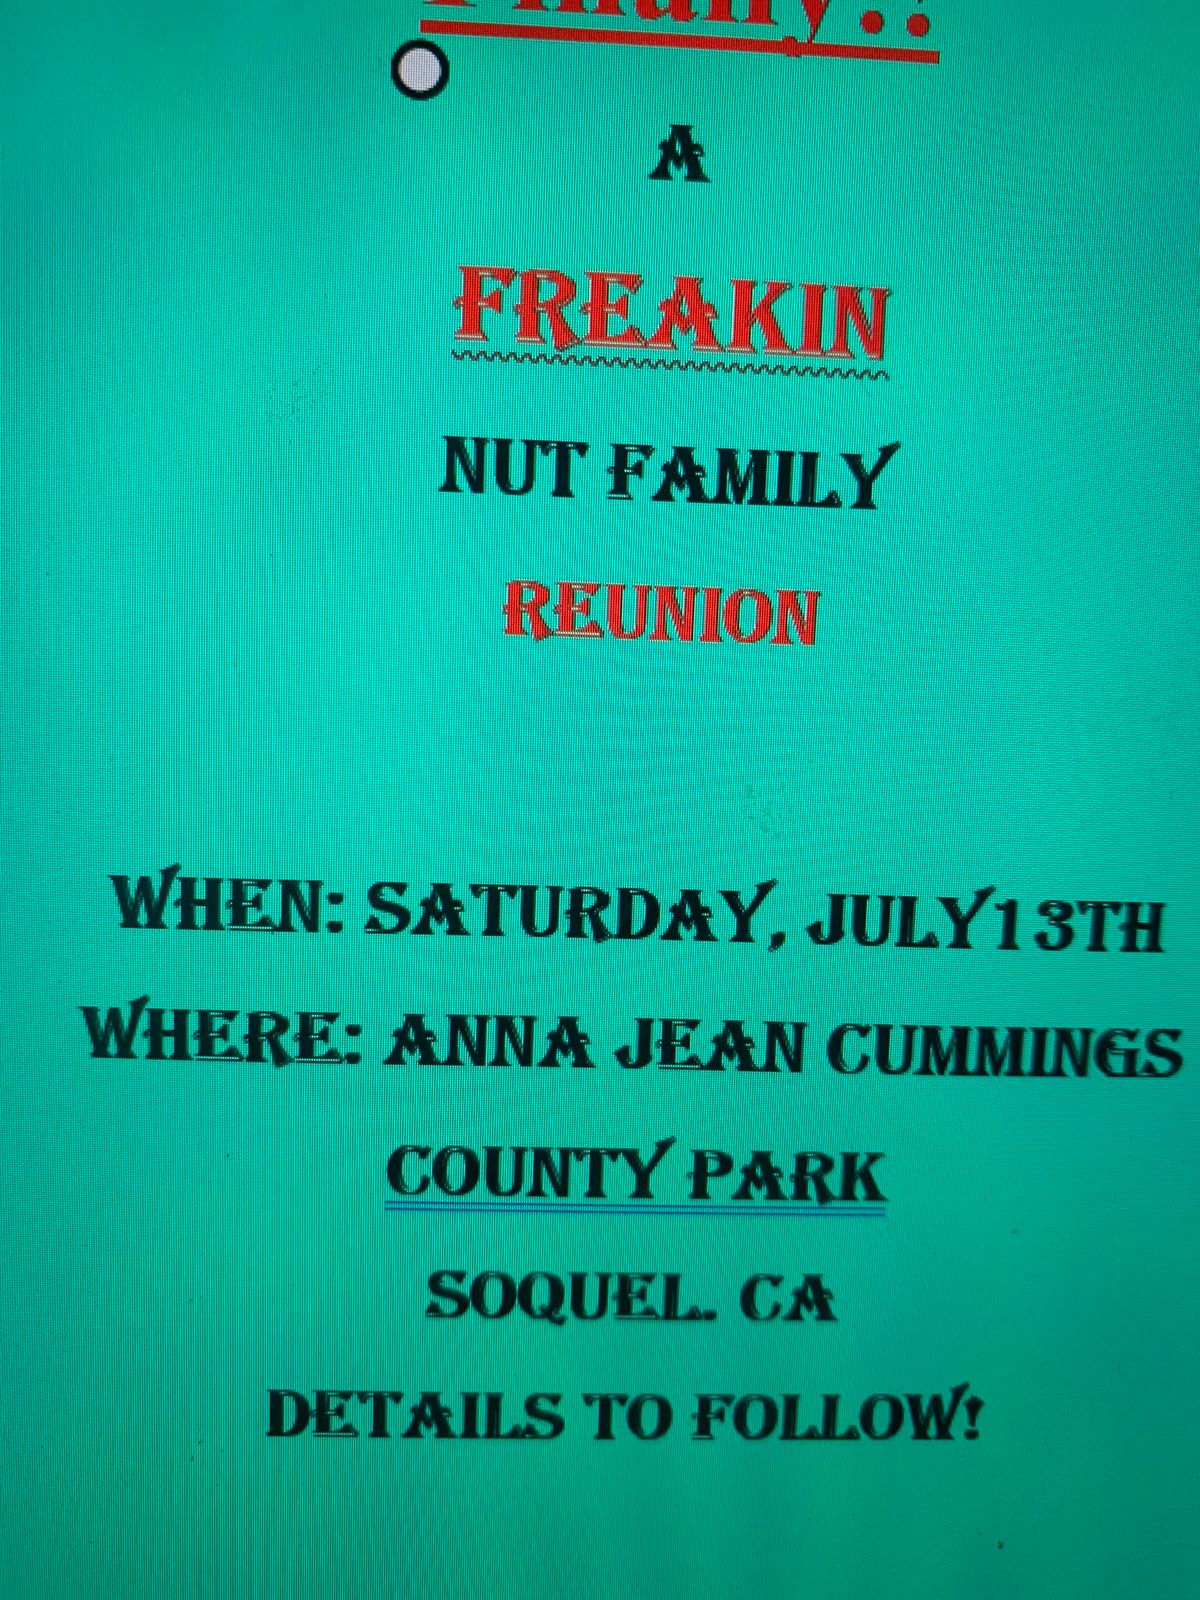 Nut Family Reunion